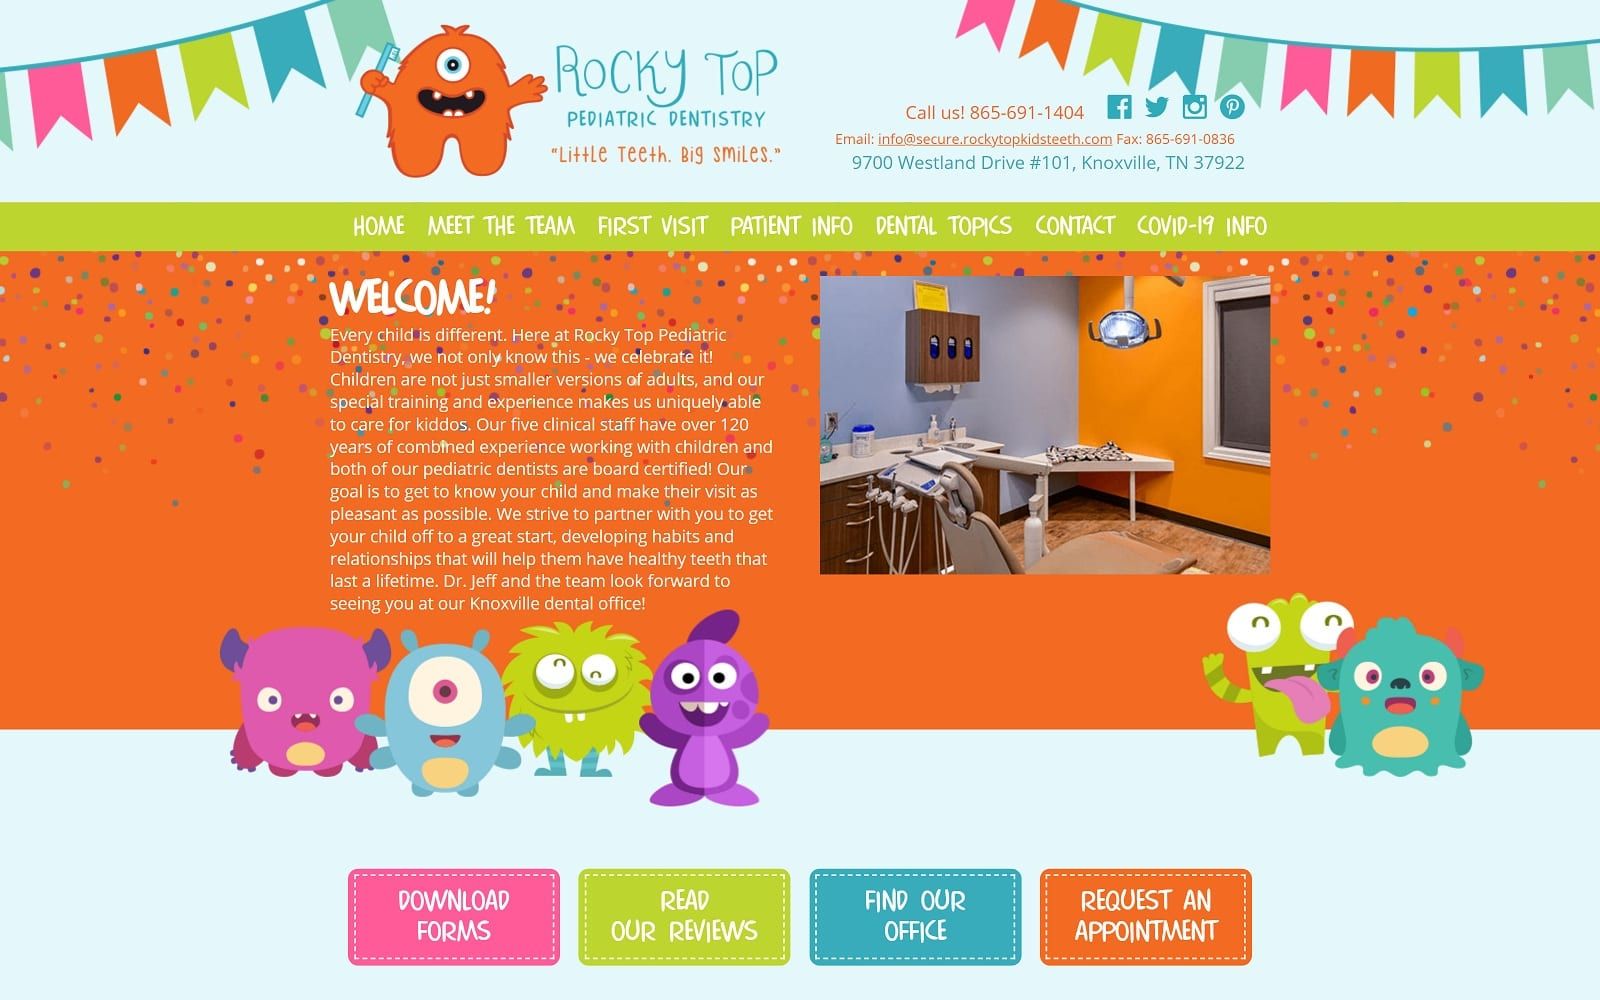 The Screenshot of Rocky Top Pediatric Dentistry rockytopkidsteeth.com Website